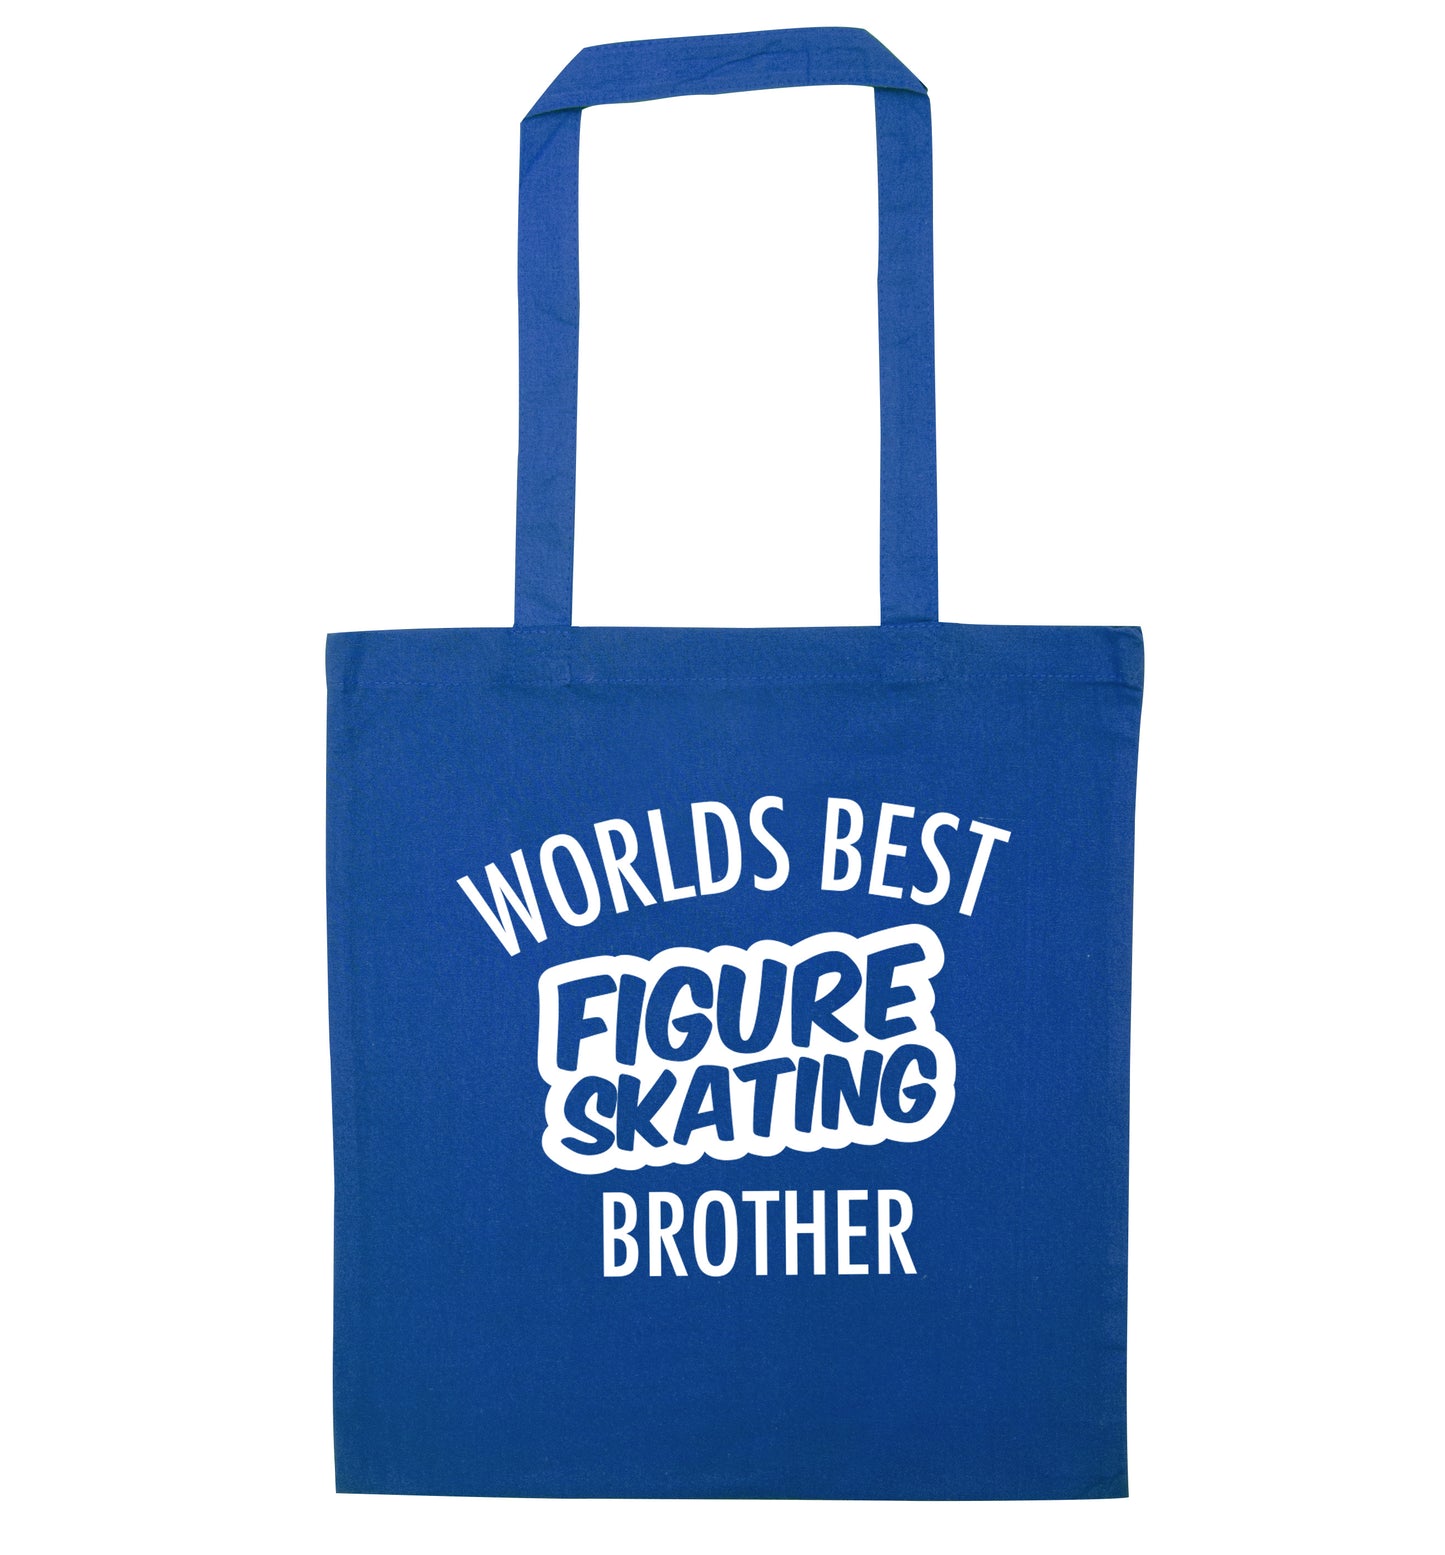 Worlds best figure skating brother blue tote bag